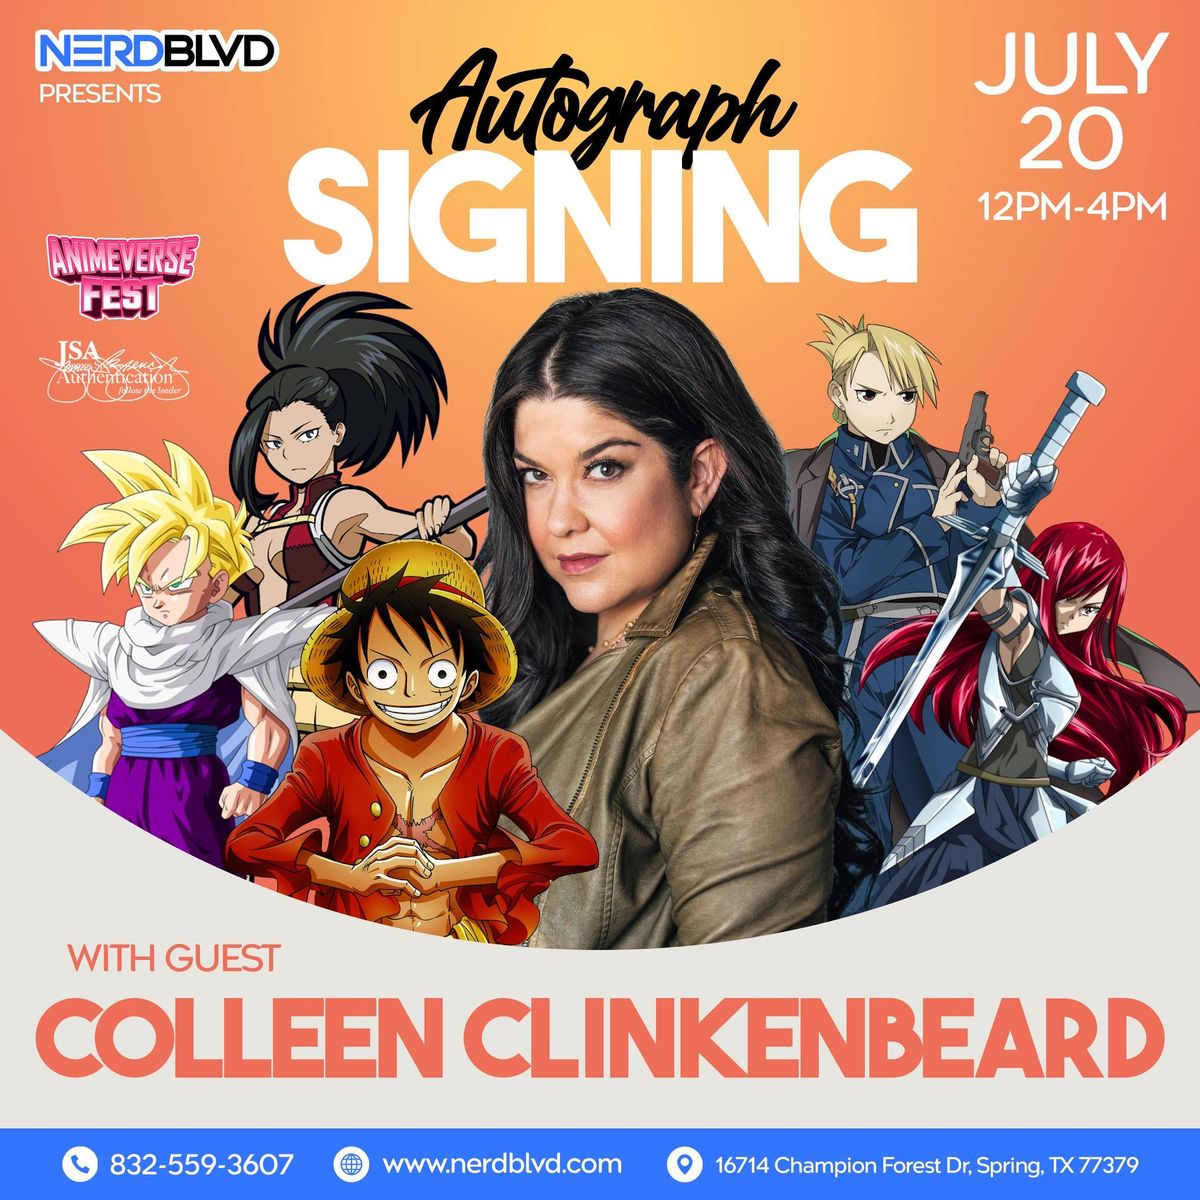 Nerd Blvd & AnimeVerse Fest Presents: Colleen Clinkenbeard Public Signing